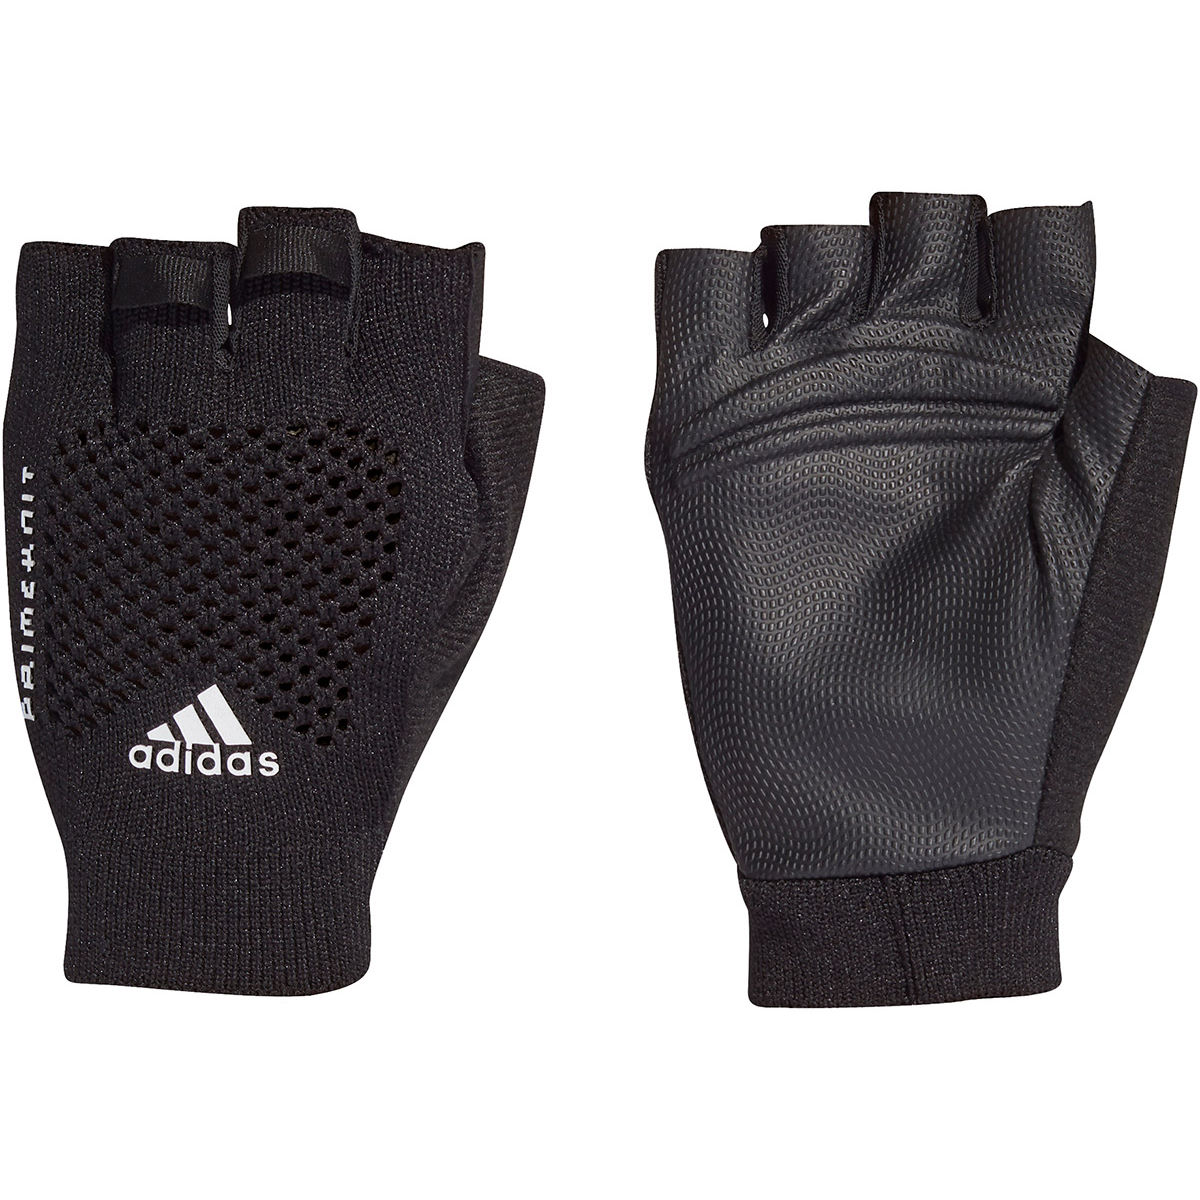 adidas PRIMEKNIT Gloves - Guantes